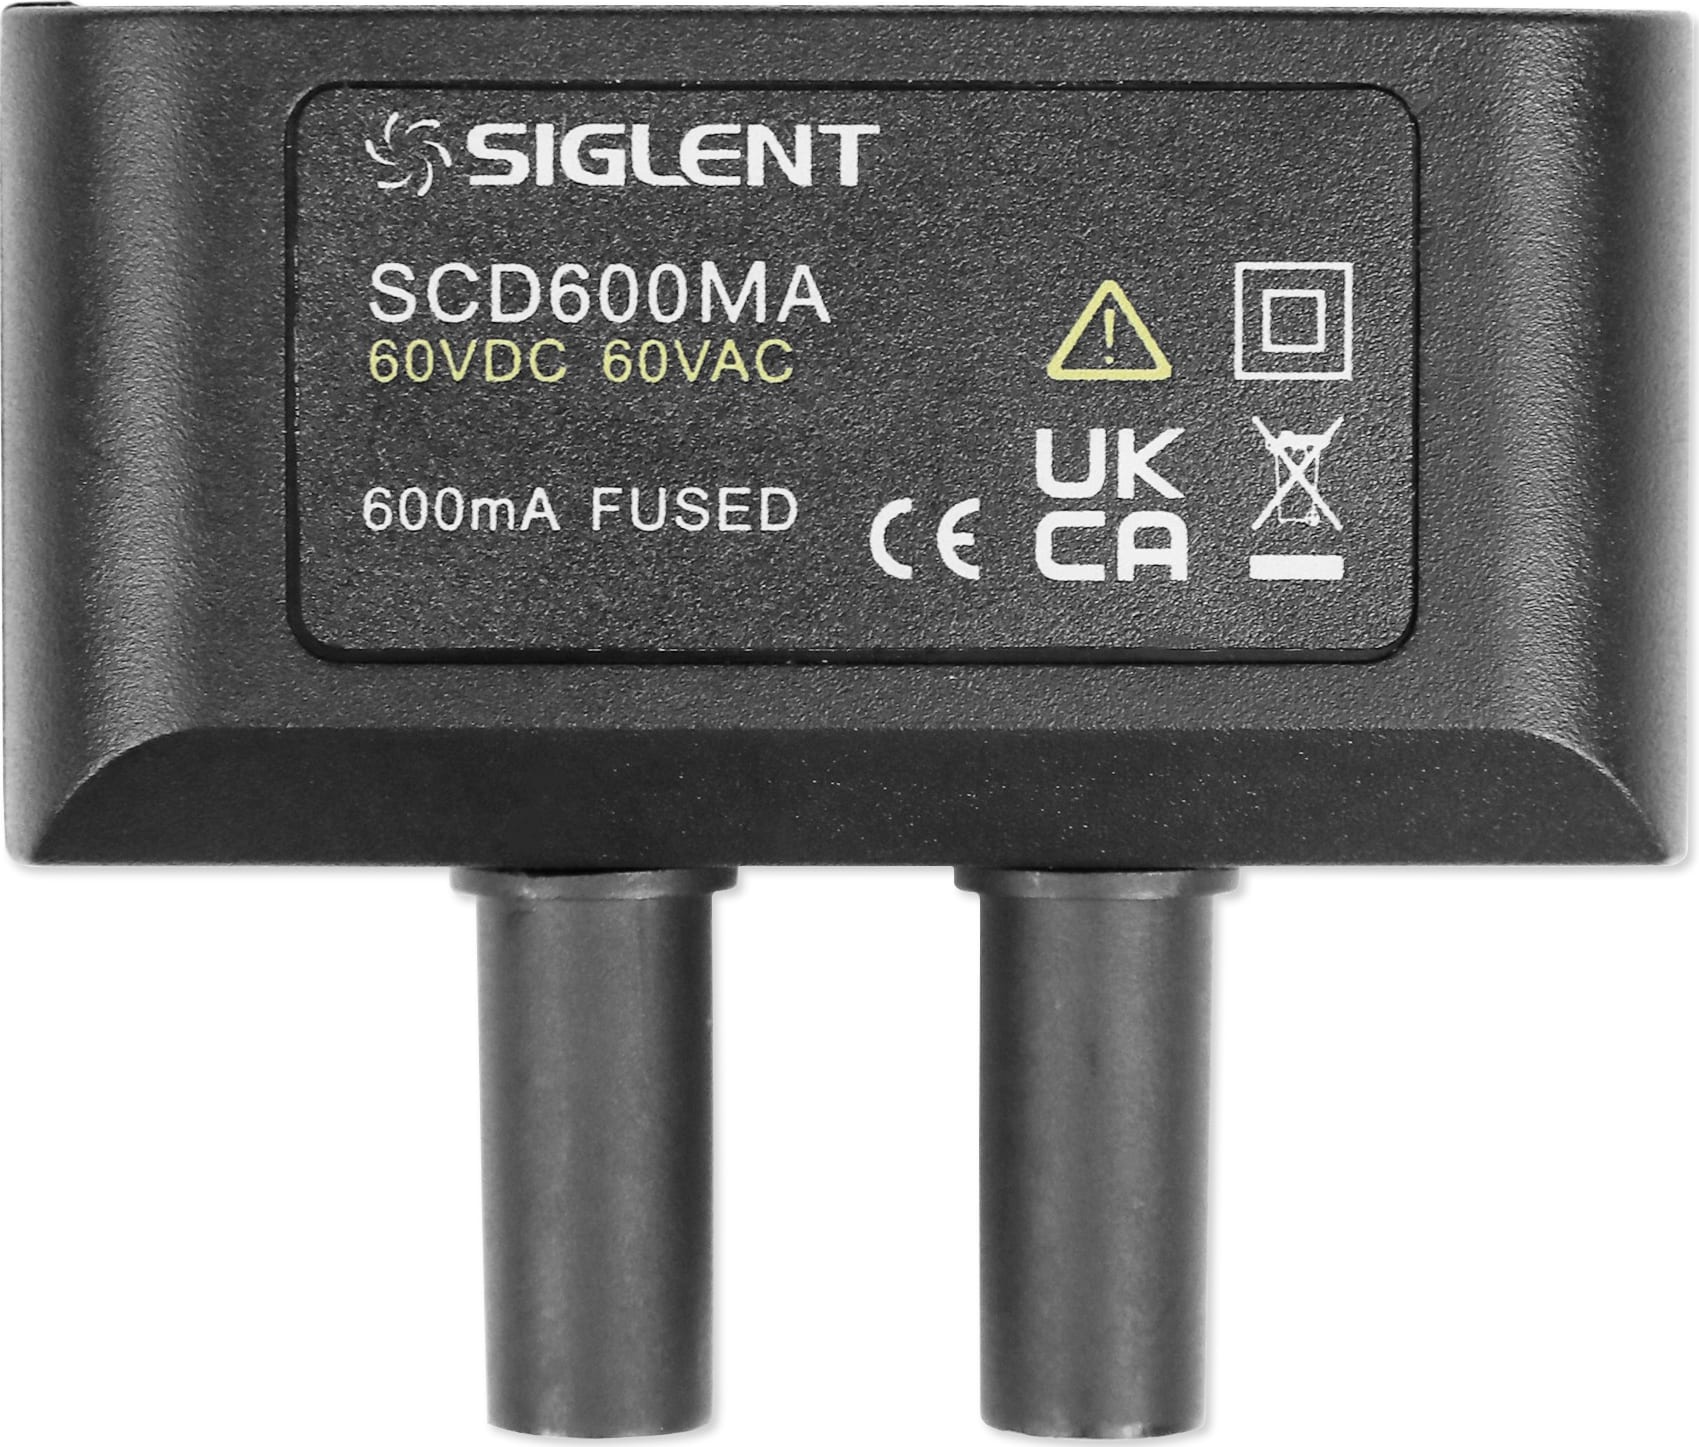 Siglent SCD600mA - Current Measurement Adapter